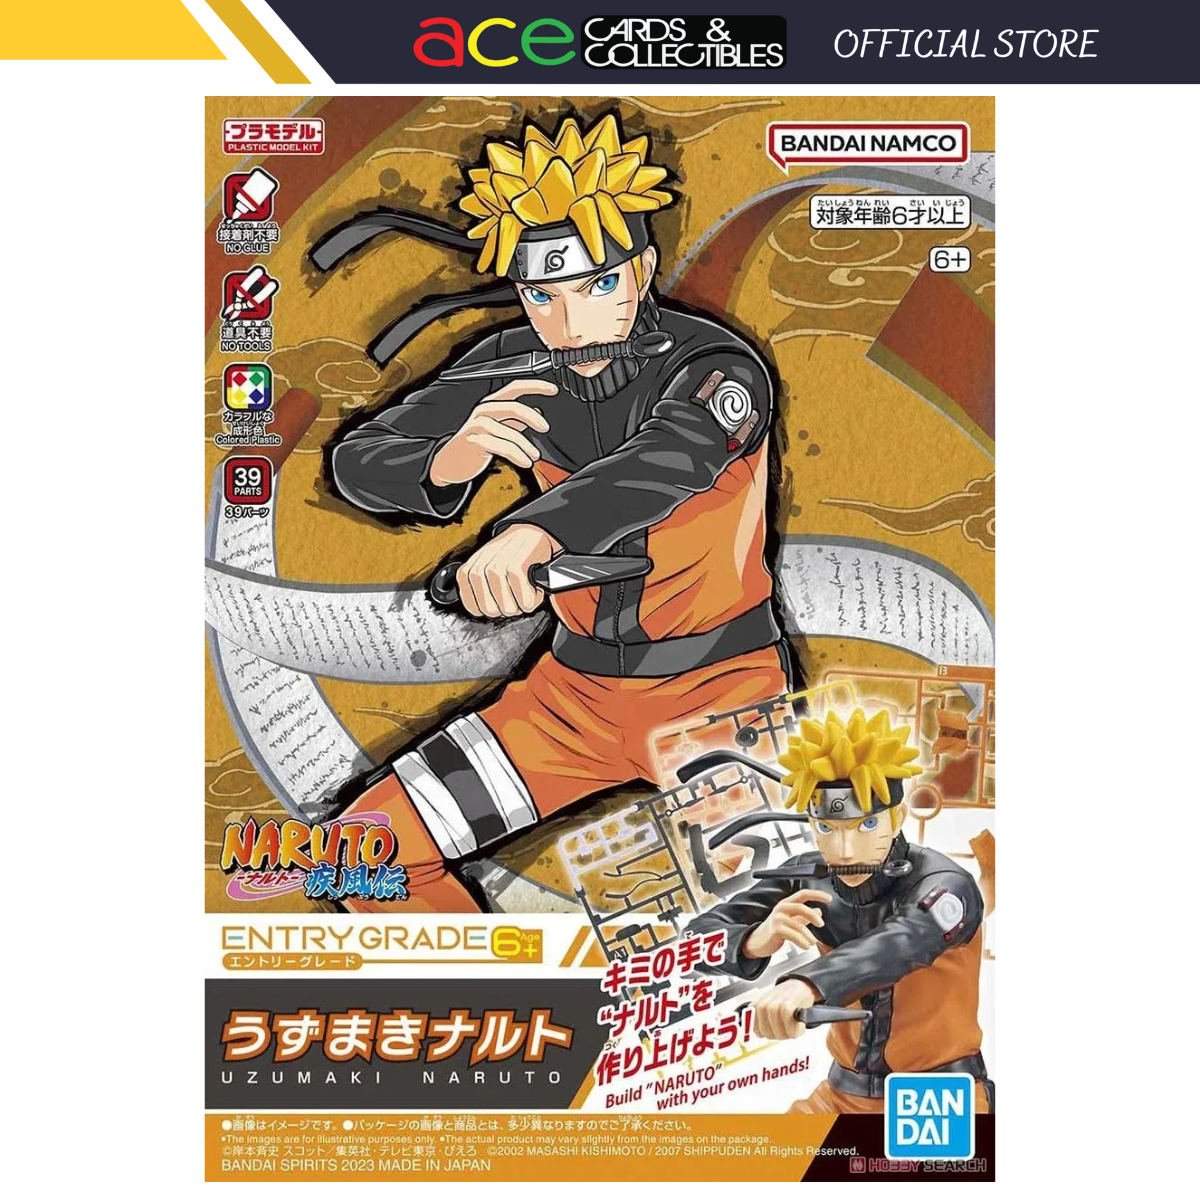 Entry Grade Plastic Model Kit "Uzumaki Naruto"-Bandai-Ace Cards & Collectibles